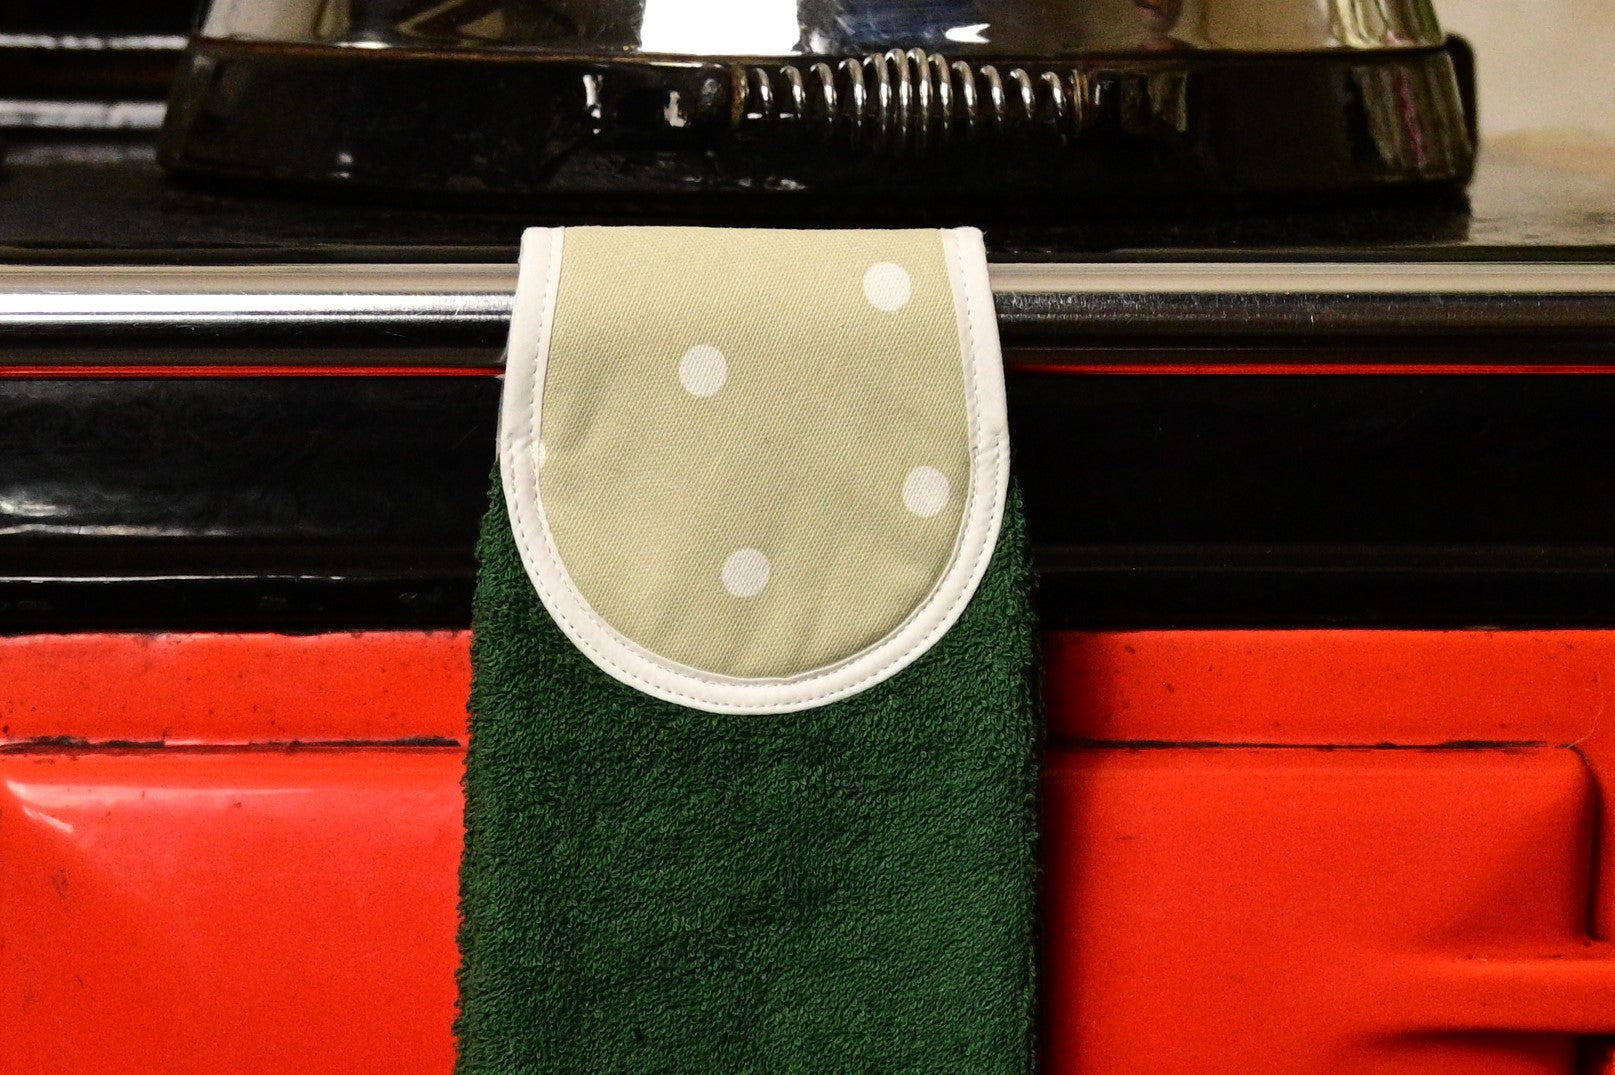 Hang ups, Kitchen towels, Green Spot on Green Towel